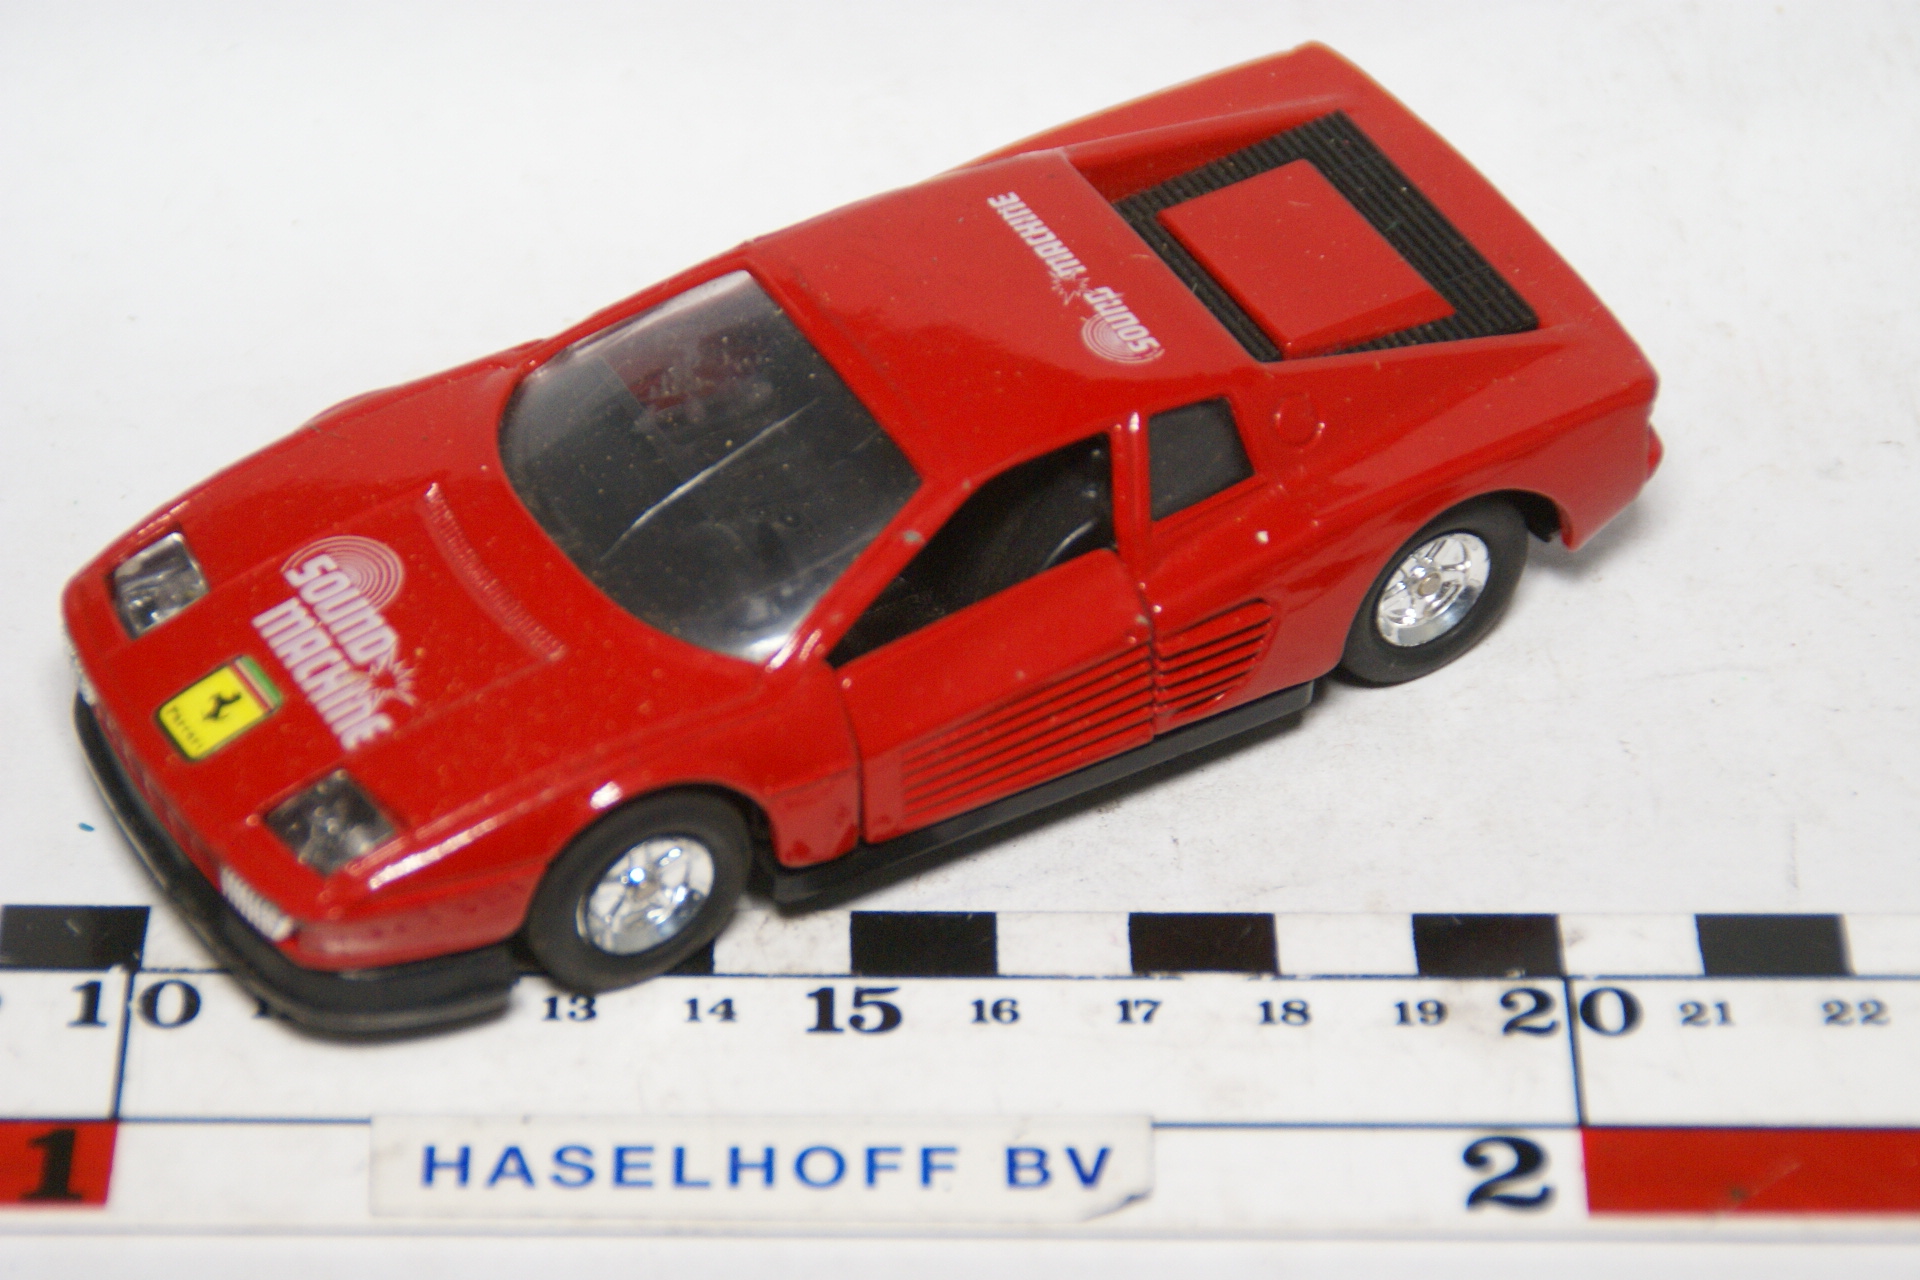 Verlichting vooroordeel Alabama miniatuur Ferrari Soundmachine TT rood, nr 8891 > Zwedenparts.com